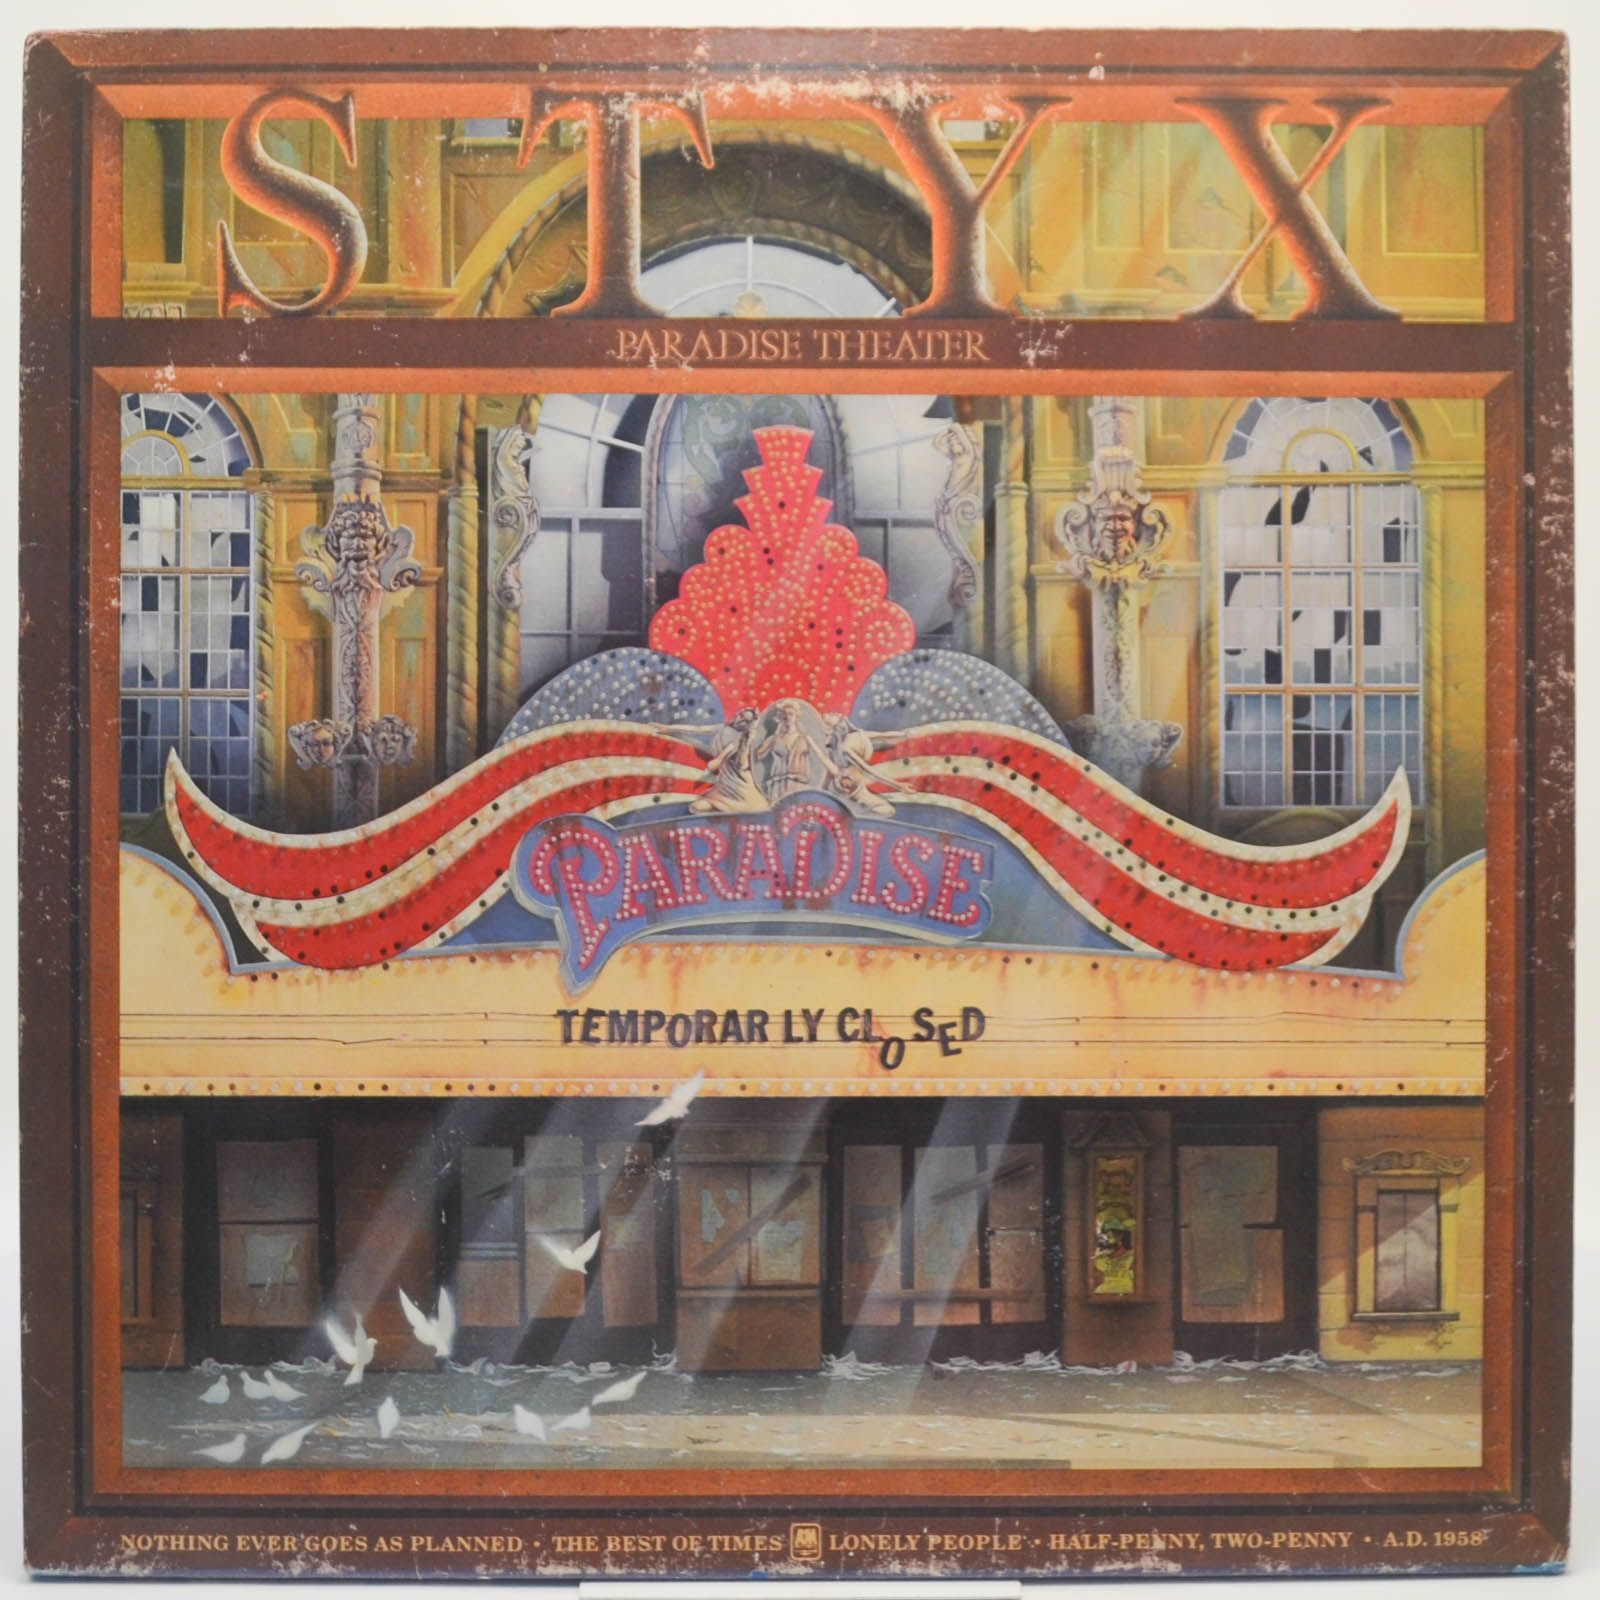 Styx — Paradise Theatre (USA), 1981